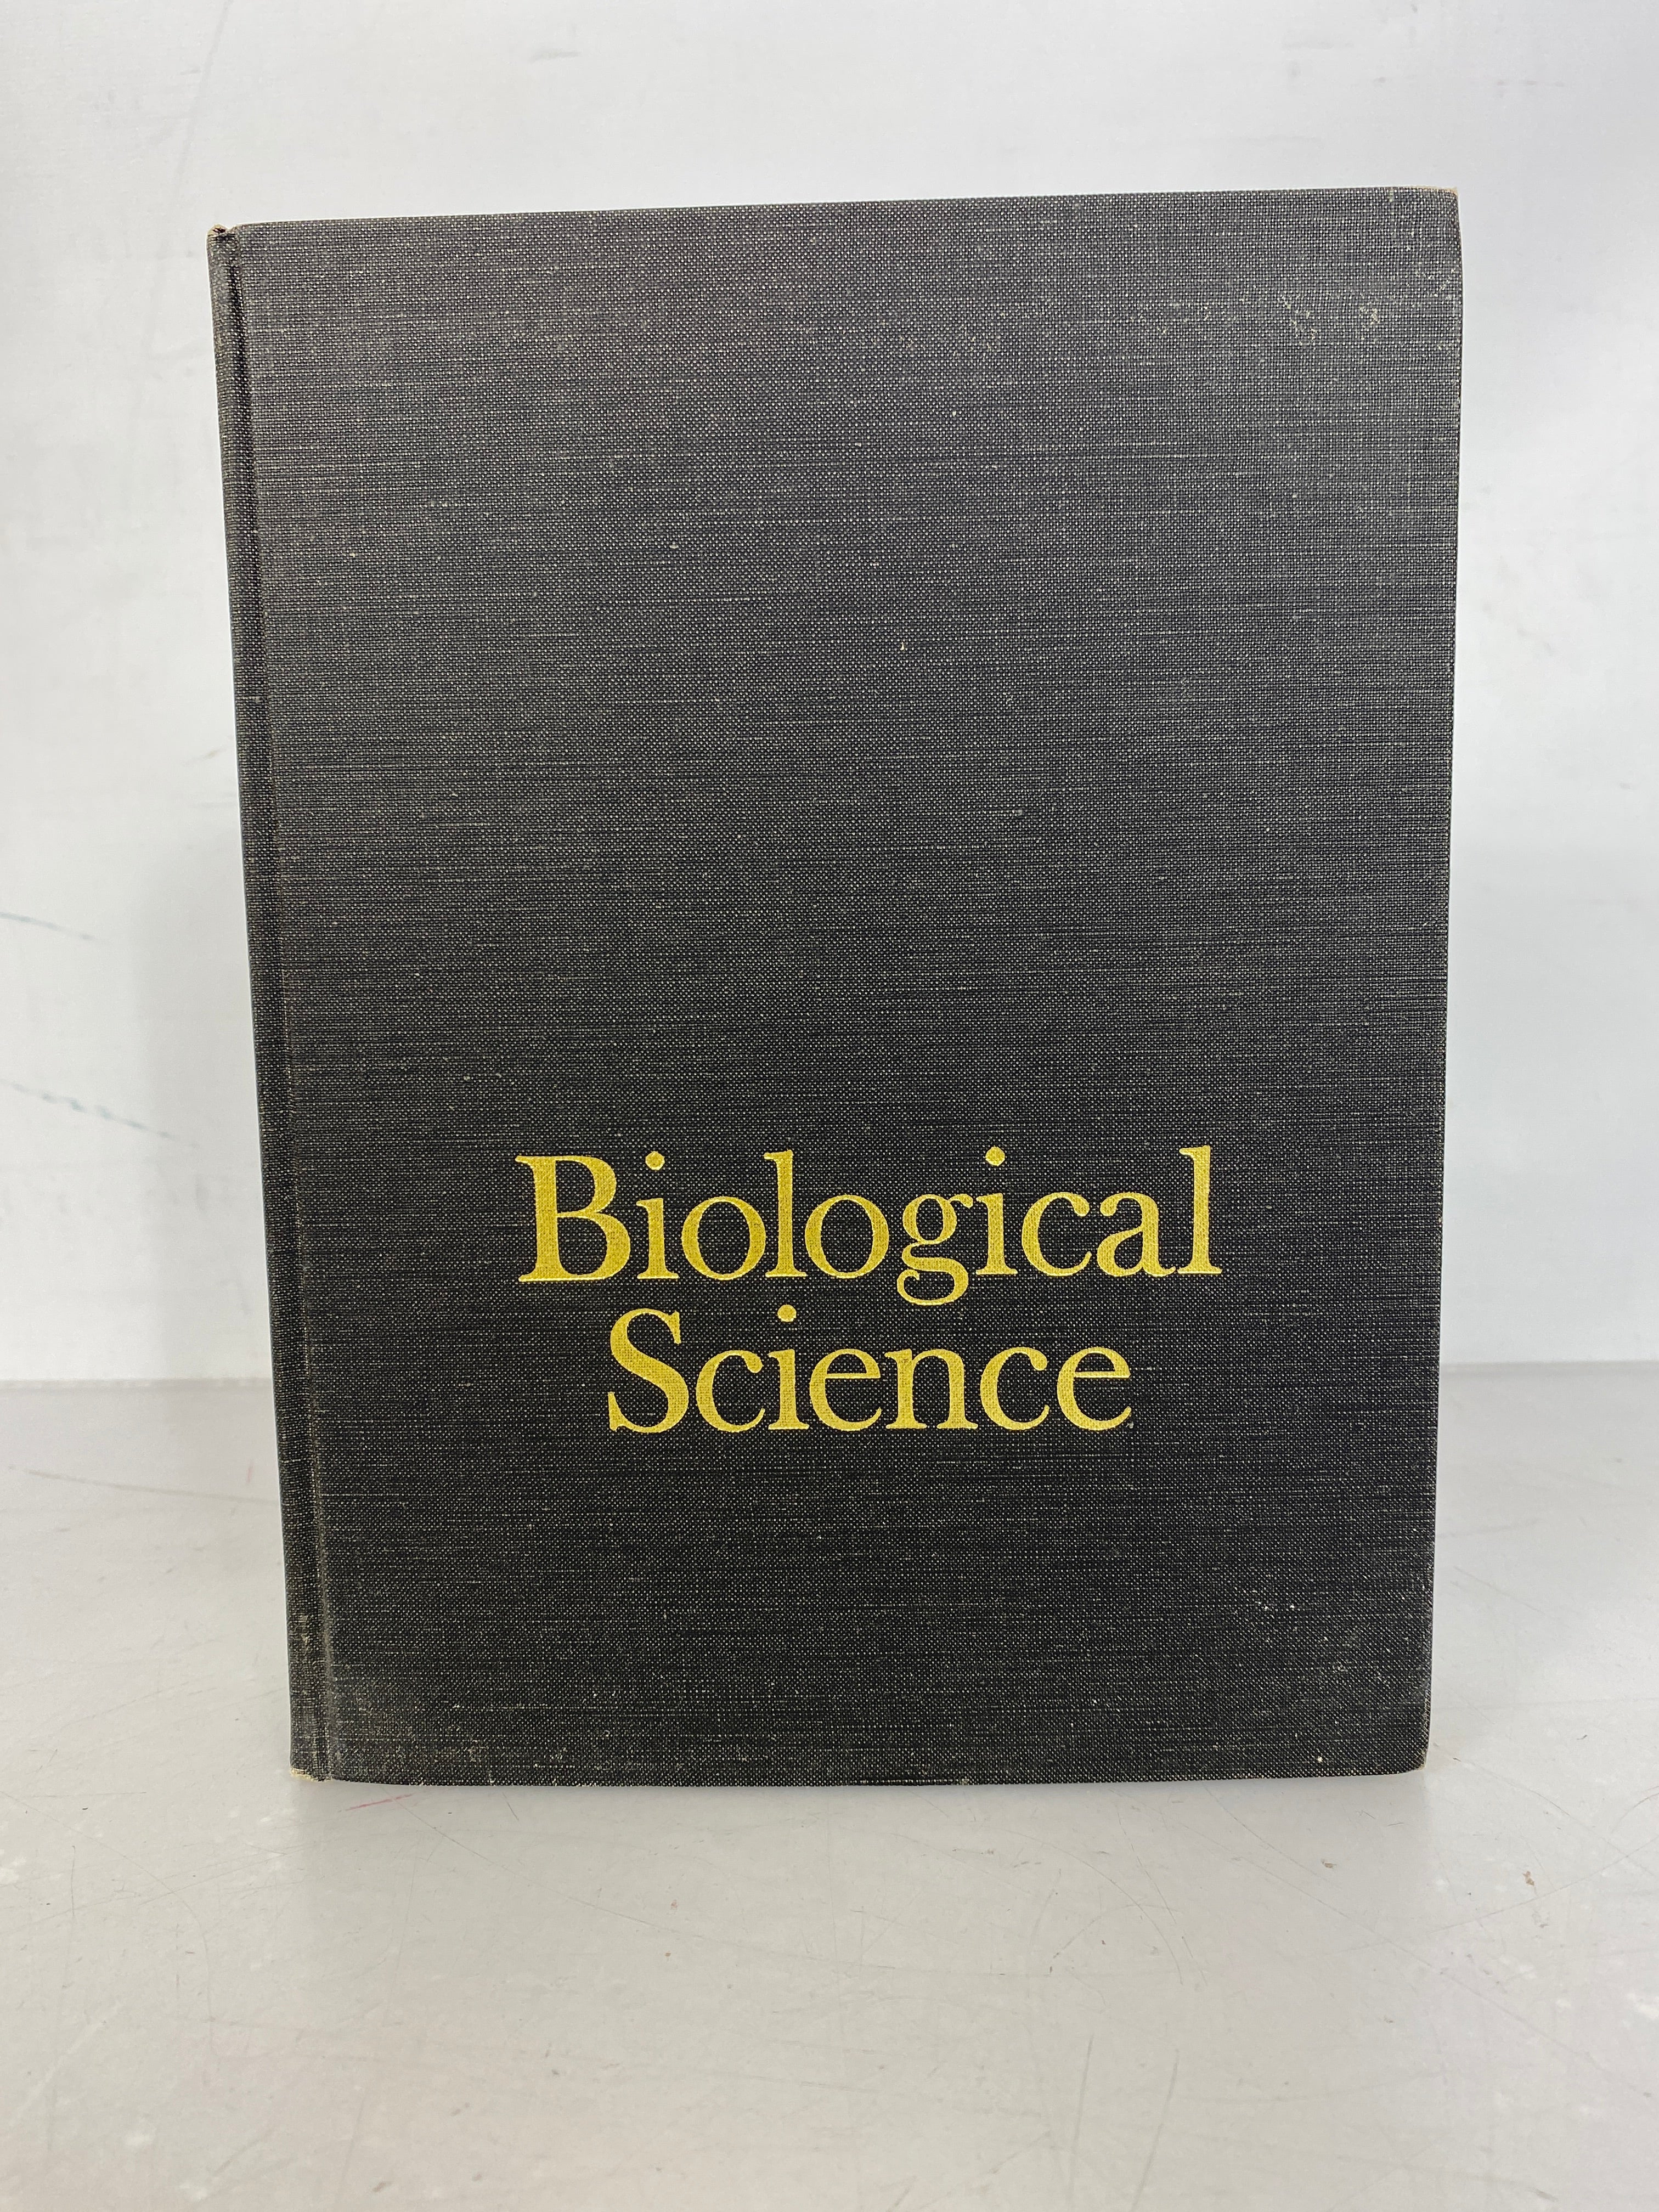 Biological Science by William Keeton 1967 HC DJ